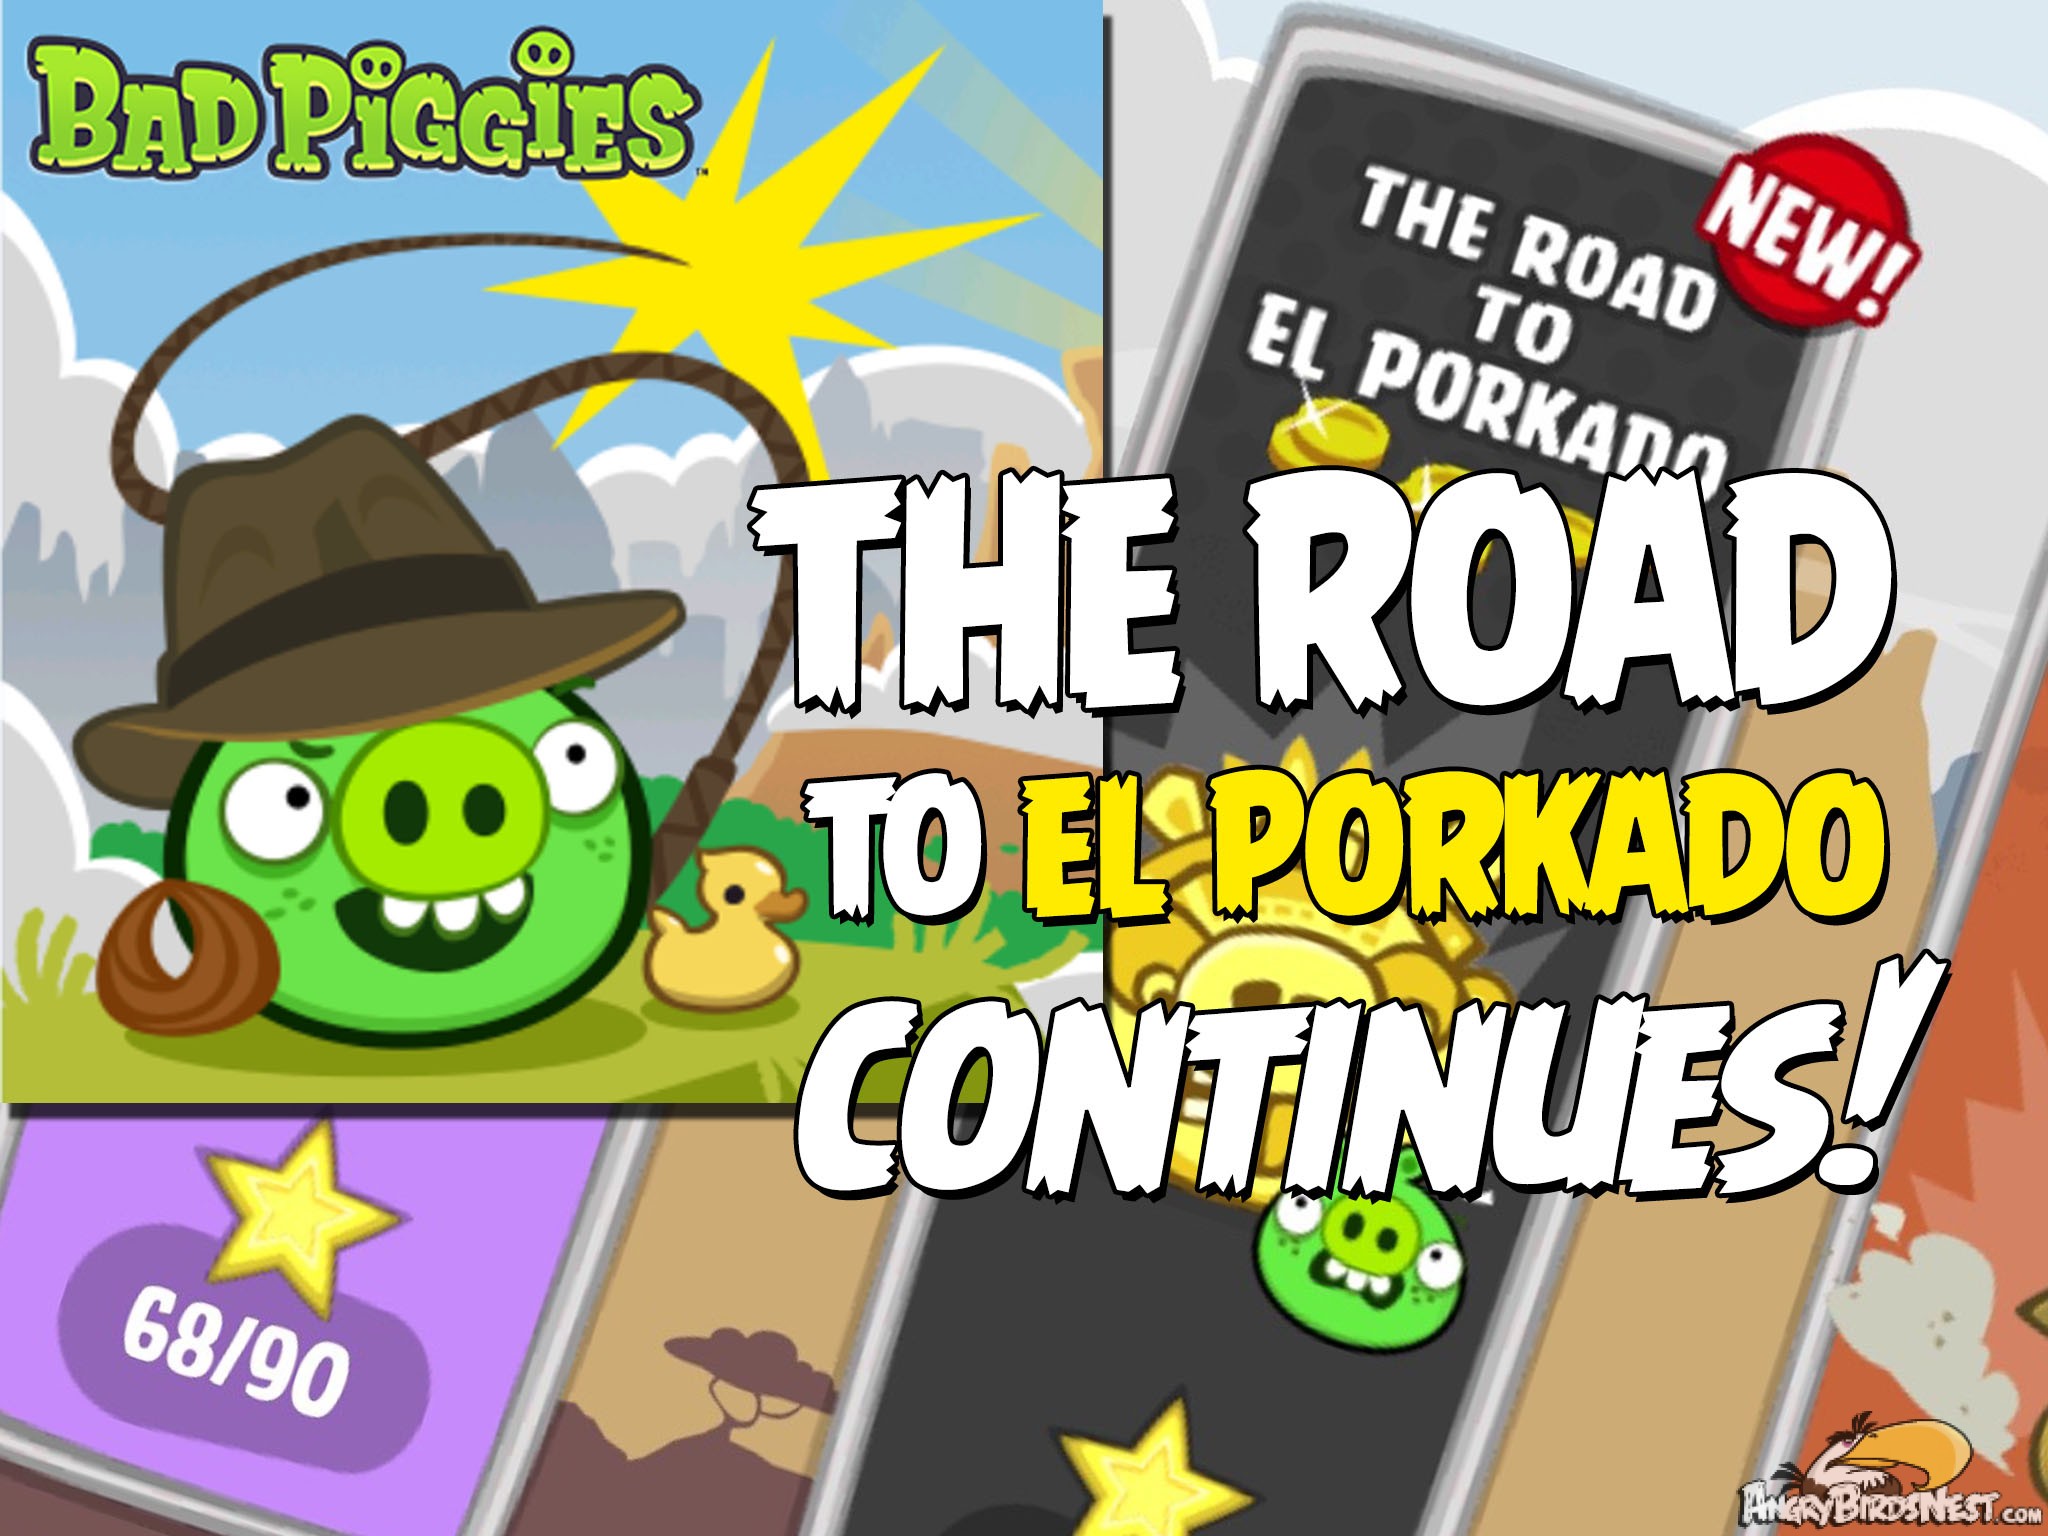 Bad Piggies Update The Road to el porkado continues Feature Image